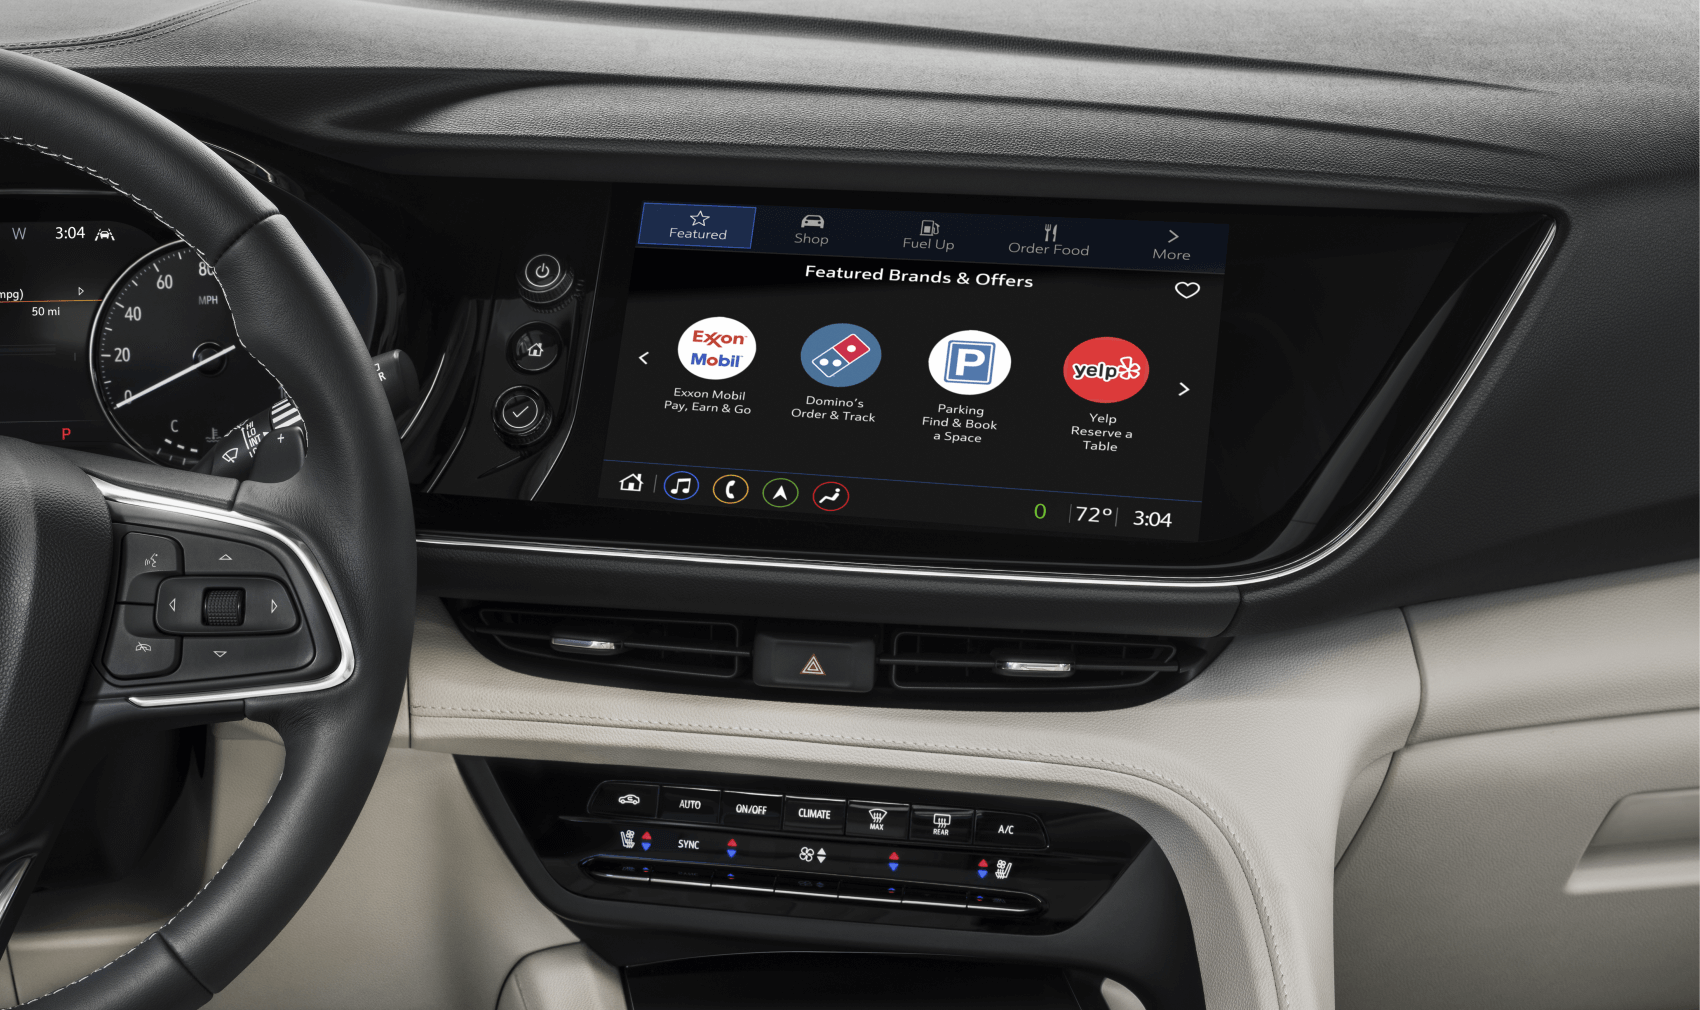 2021 Buick Envision Interior Dashboard Tech